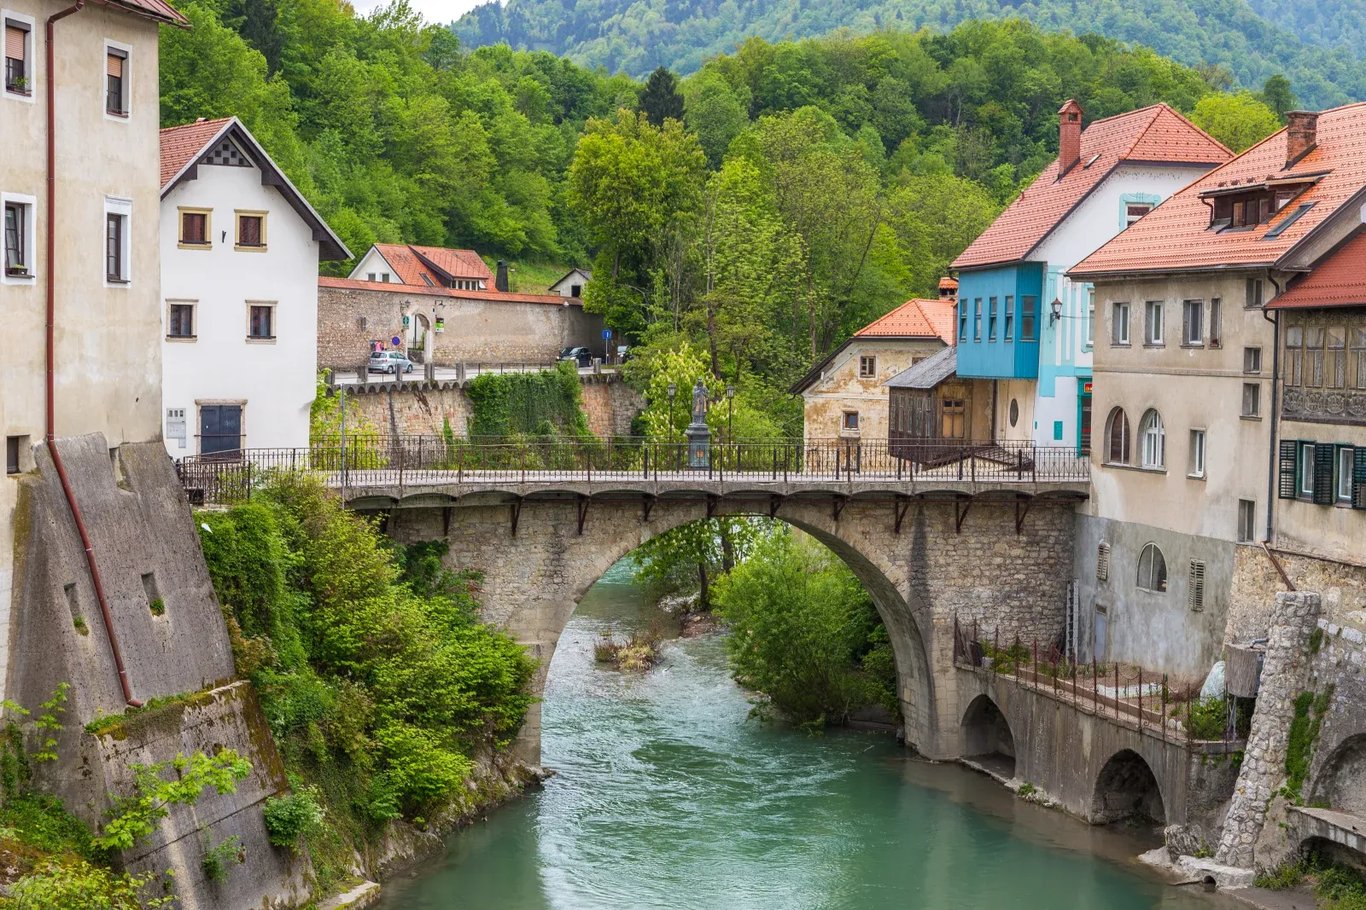 Skofja Loka, The medieval town of Slovenia